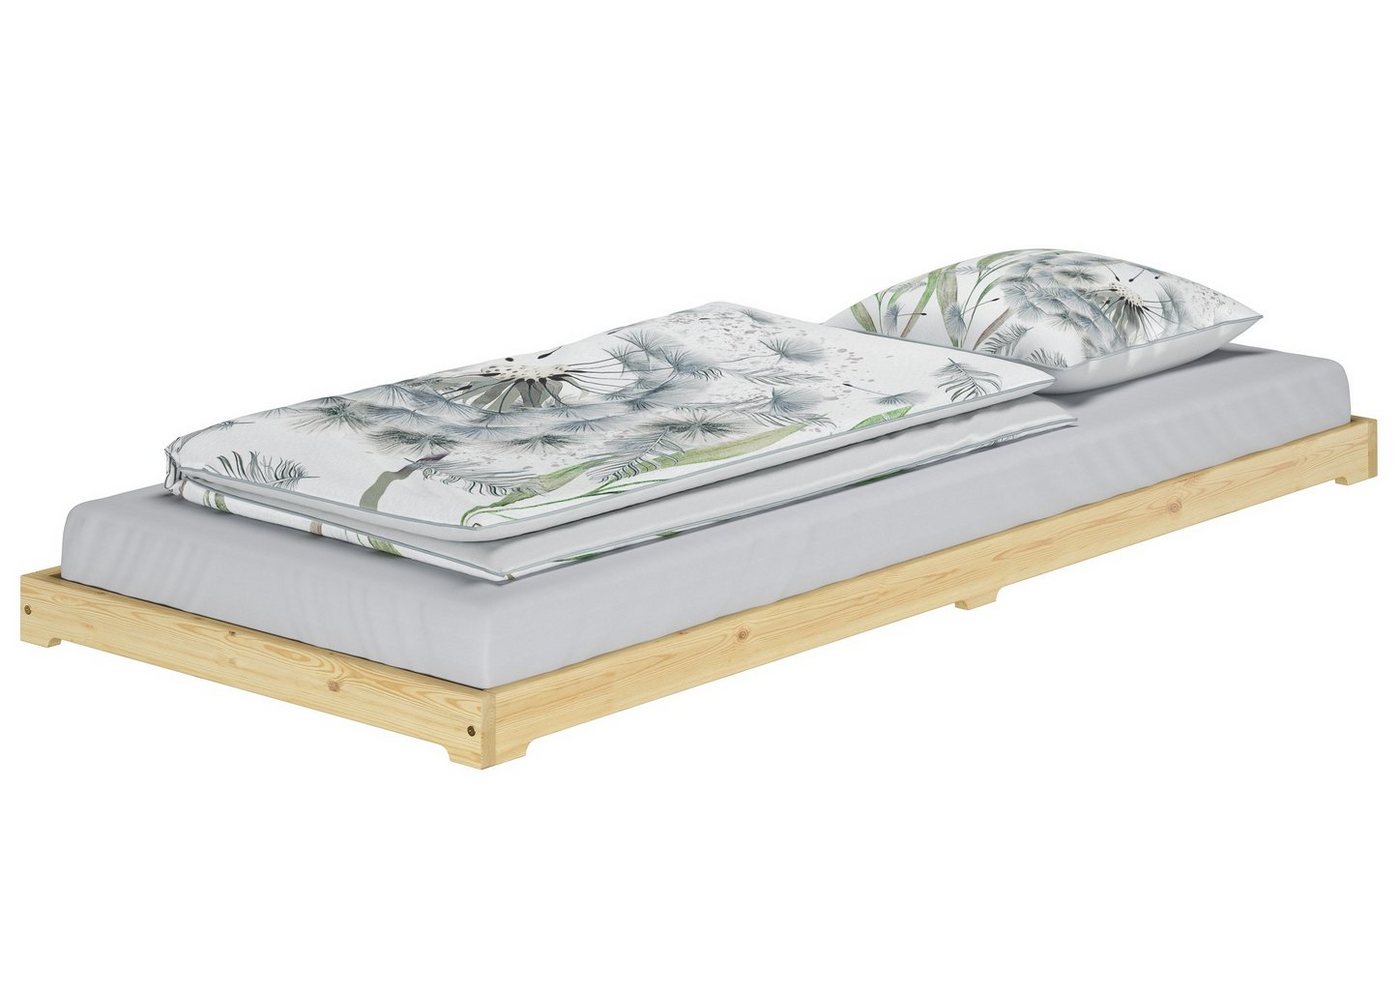 ERST-HOLZ Bett Kleines Futonbett extra niedriges Holzbett 80x180 cm Kiefer lackiert, Kieferfarblos lackiert von ERST-HOLZ